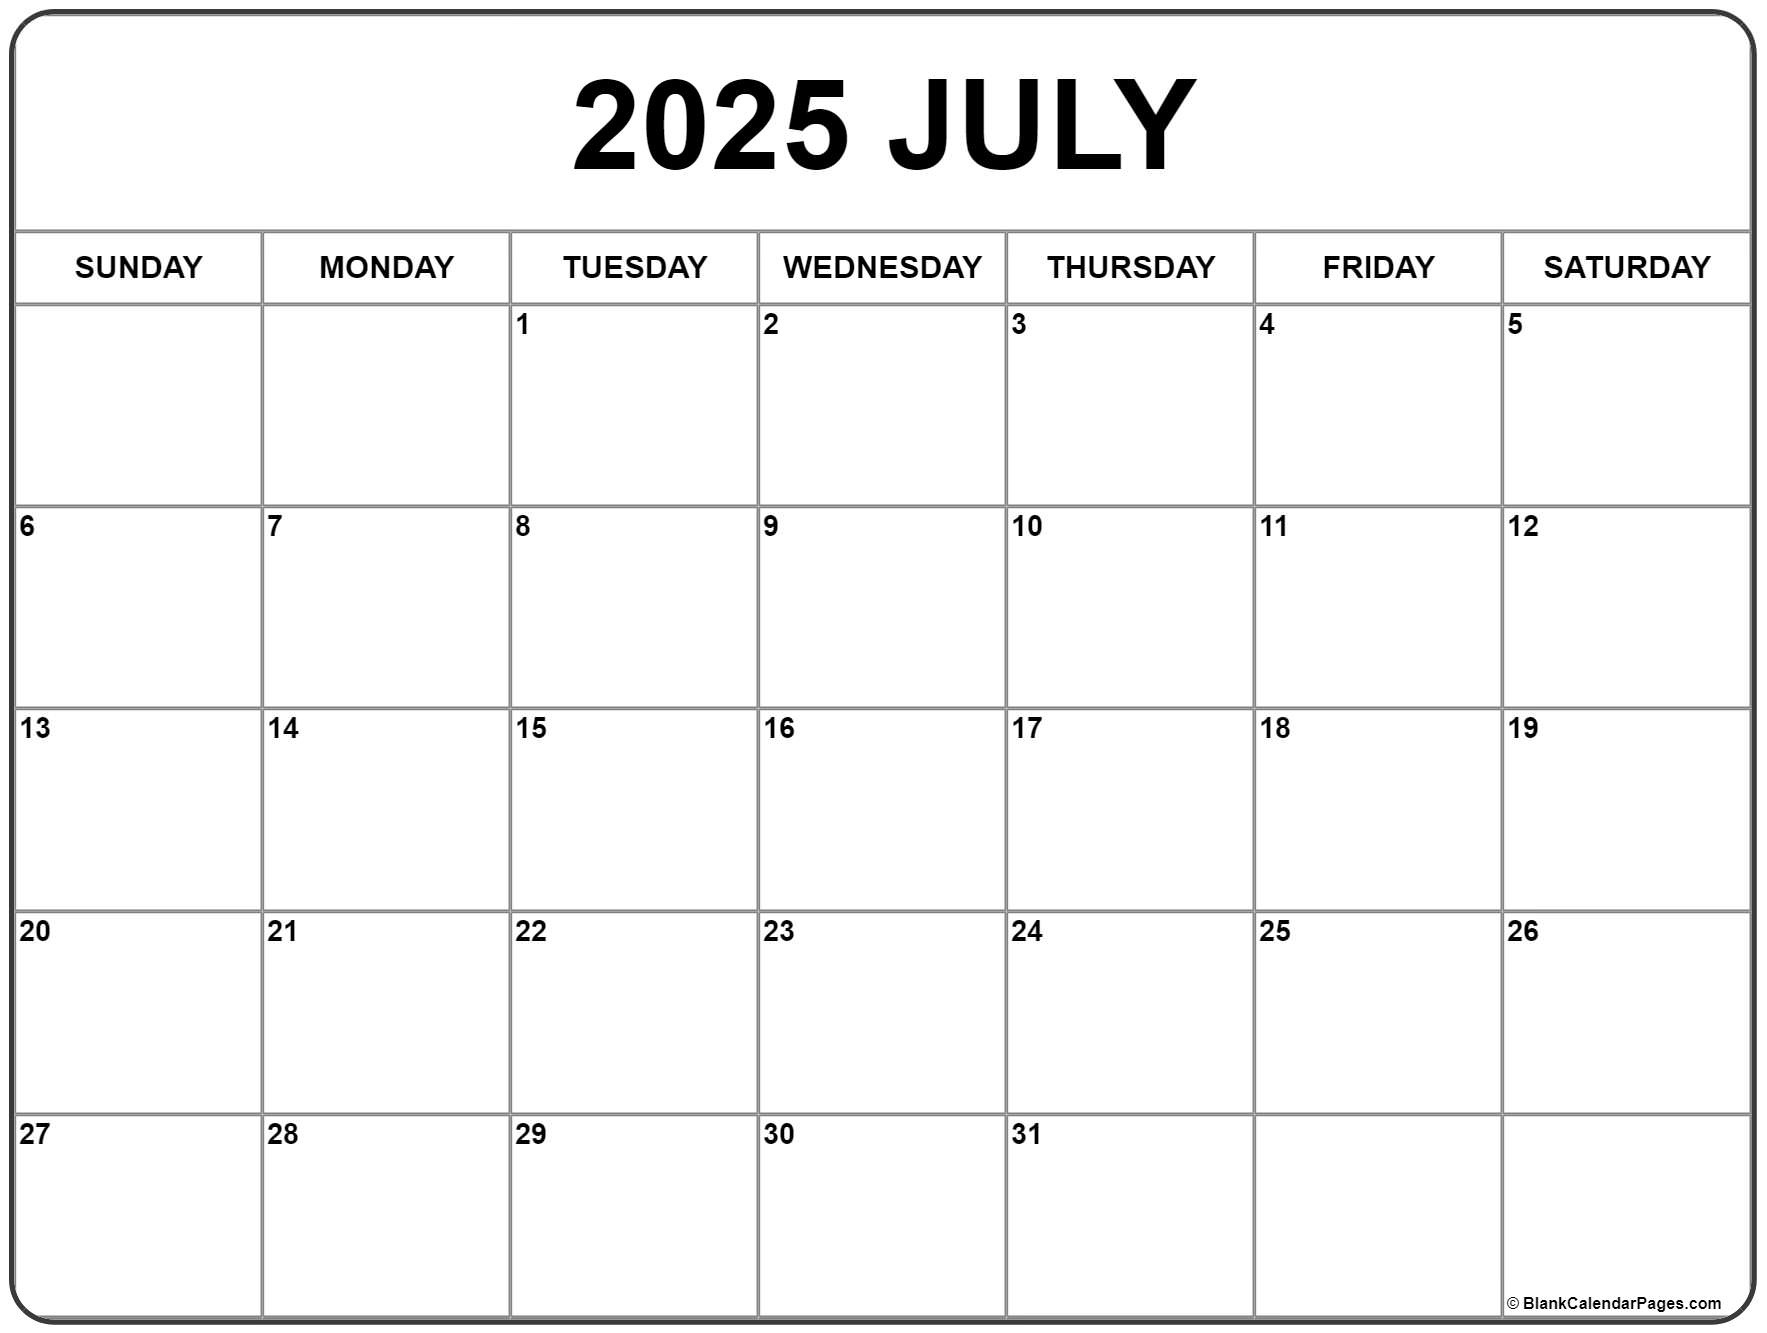 July 2025 Calendar | Free Printable Calendar intended for Calendar For July 2025